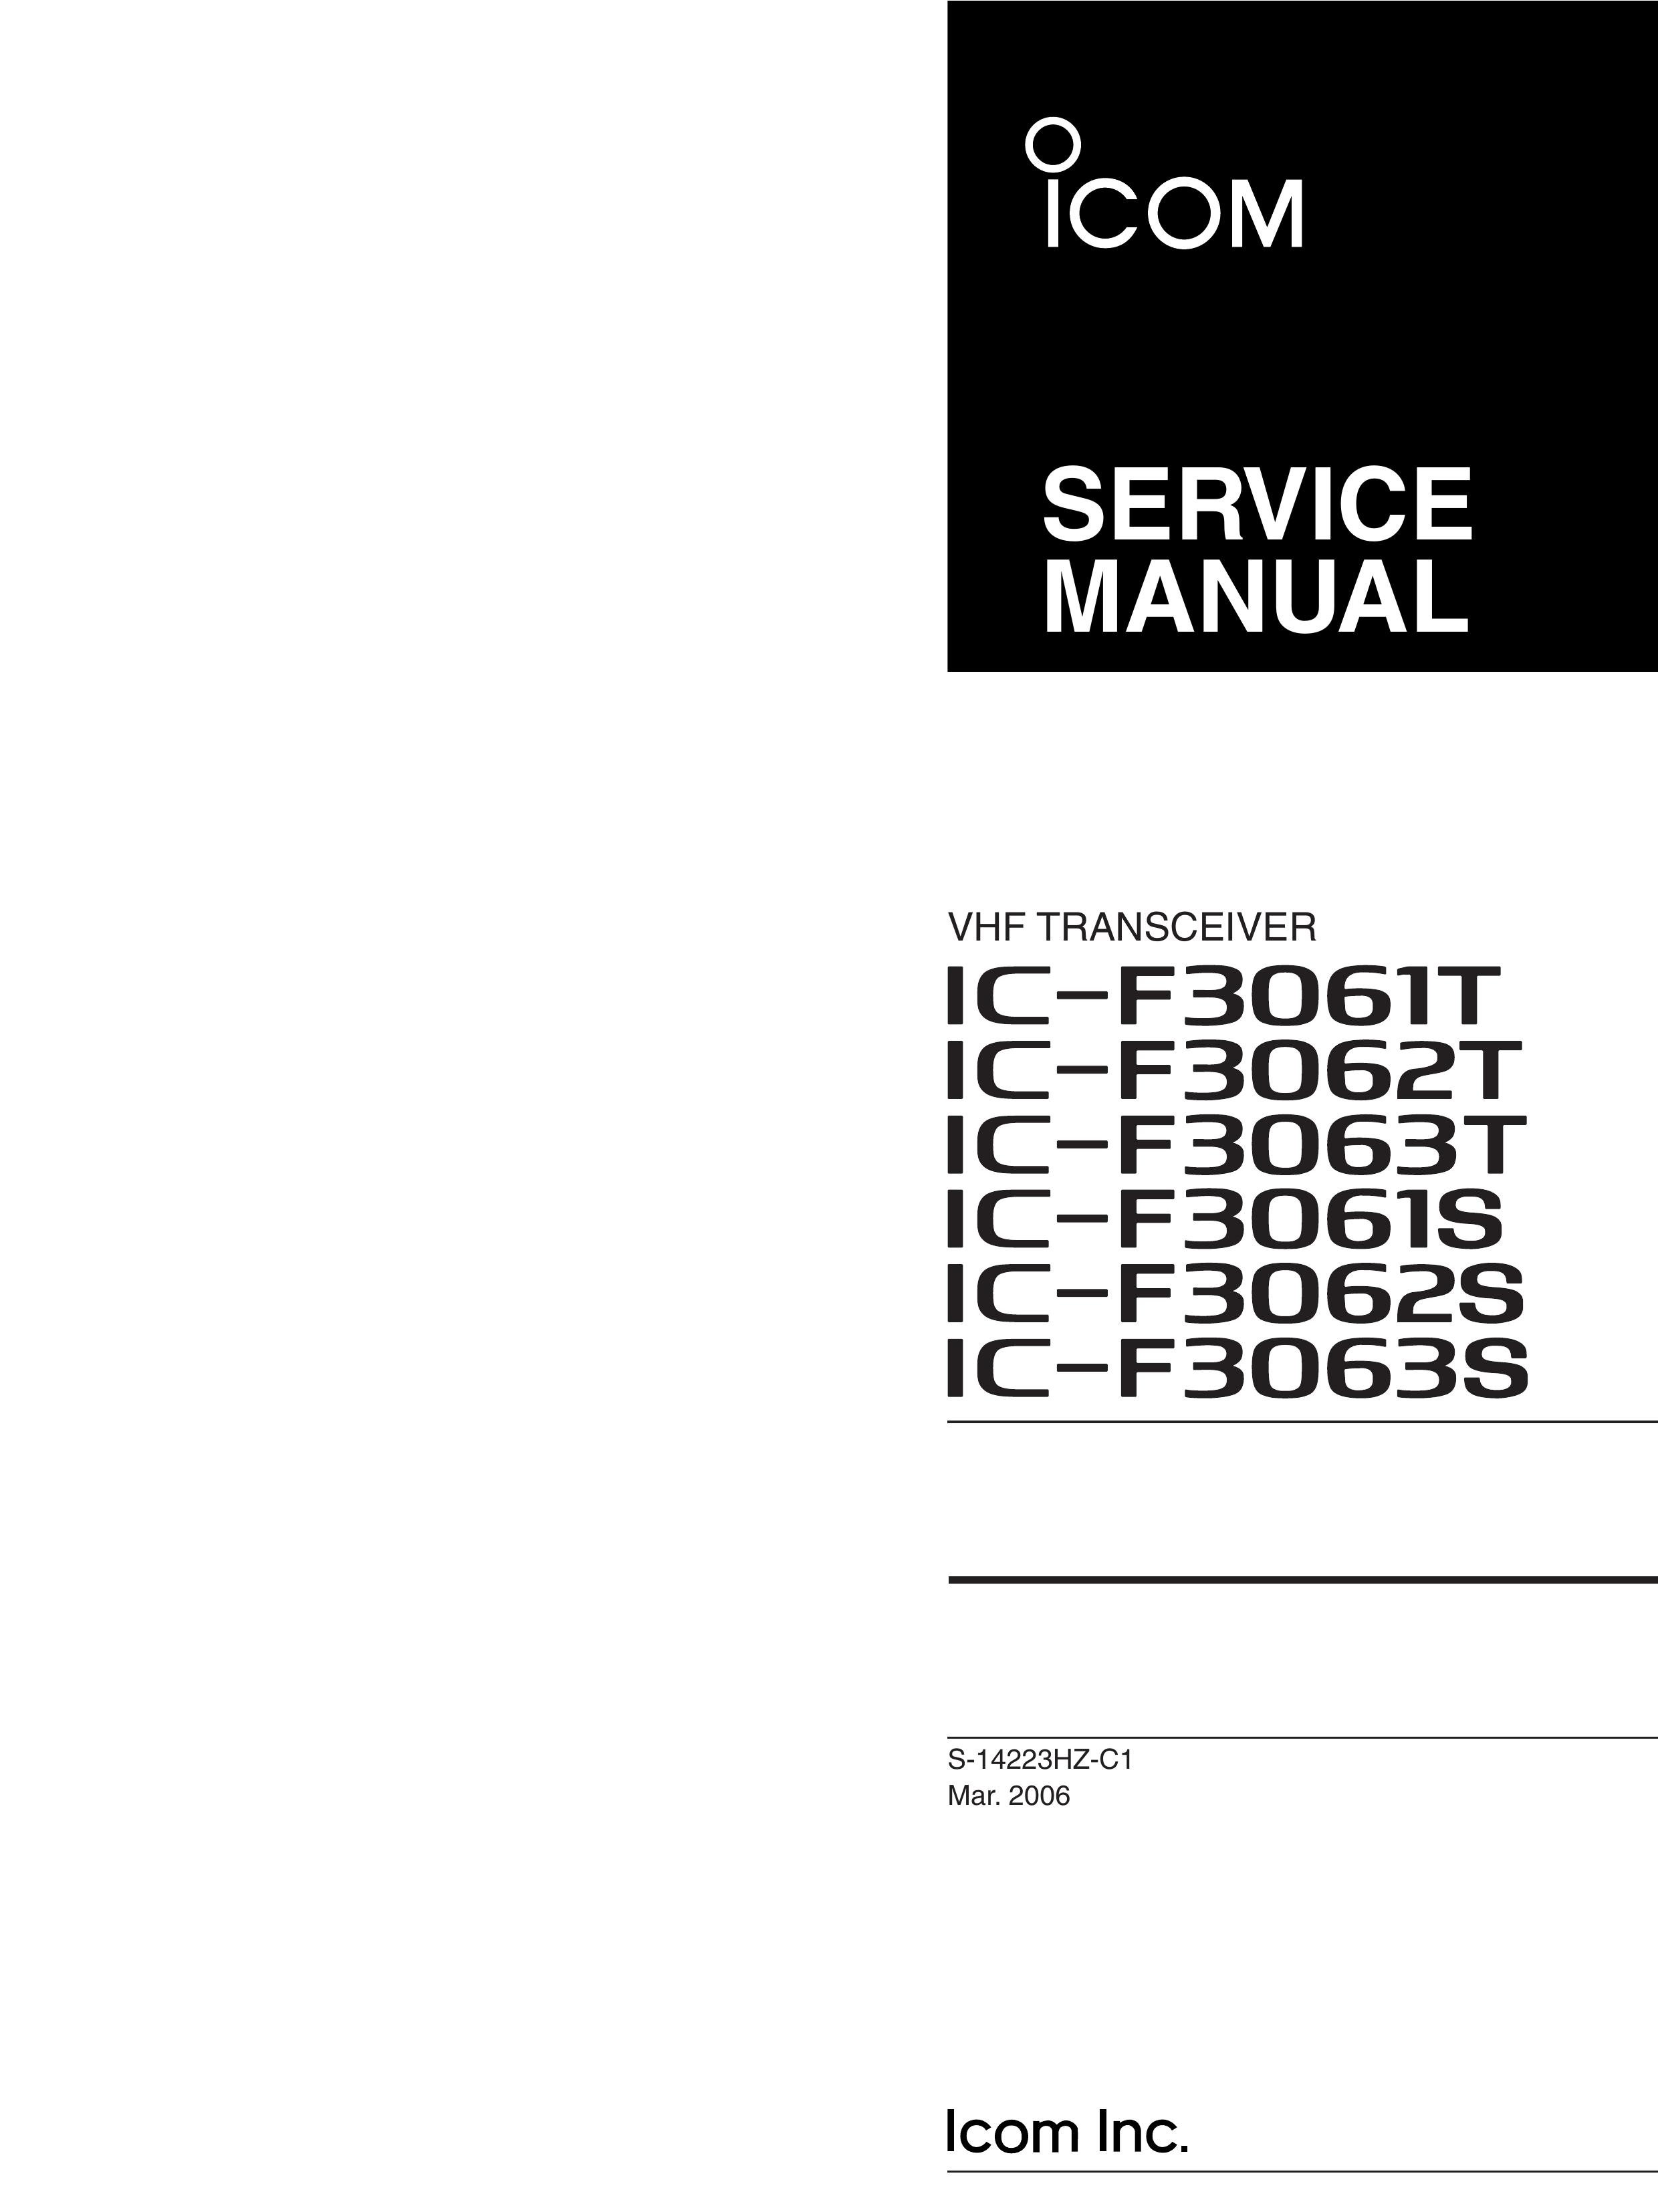 Icom IC-F3062T Marine Radio User Manual